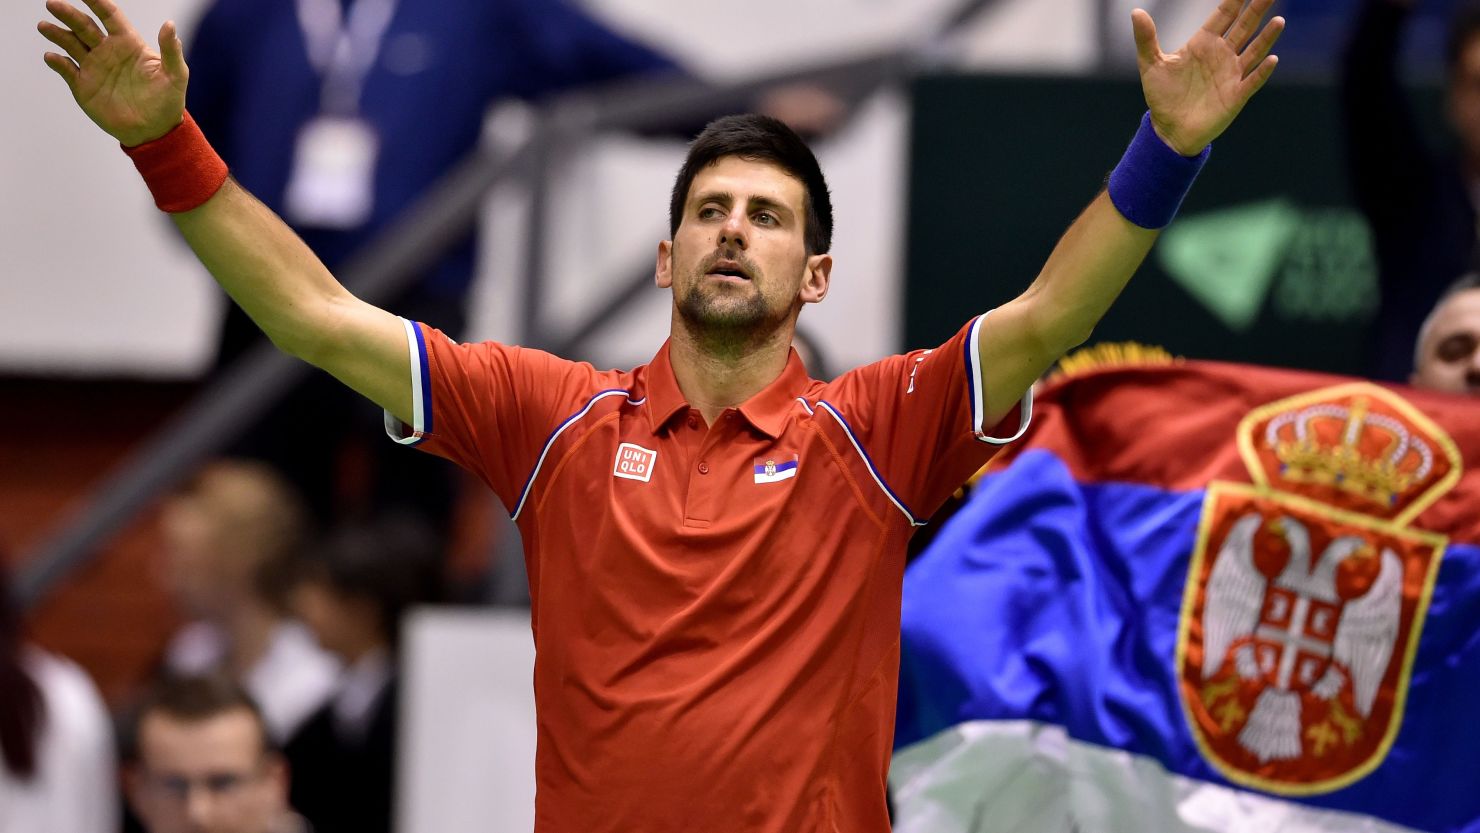 An exhausted Novak Djokovic reacts after beating Kazakhstan's Mikhail Kukushkin in a marathon five-set Davis Cup rubber in Belgrade.